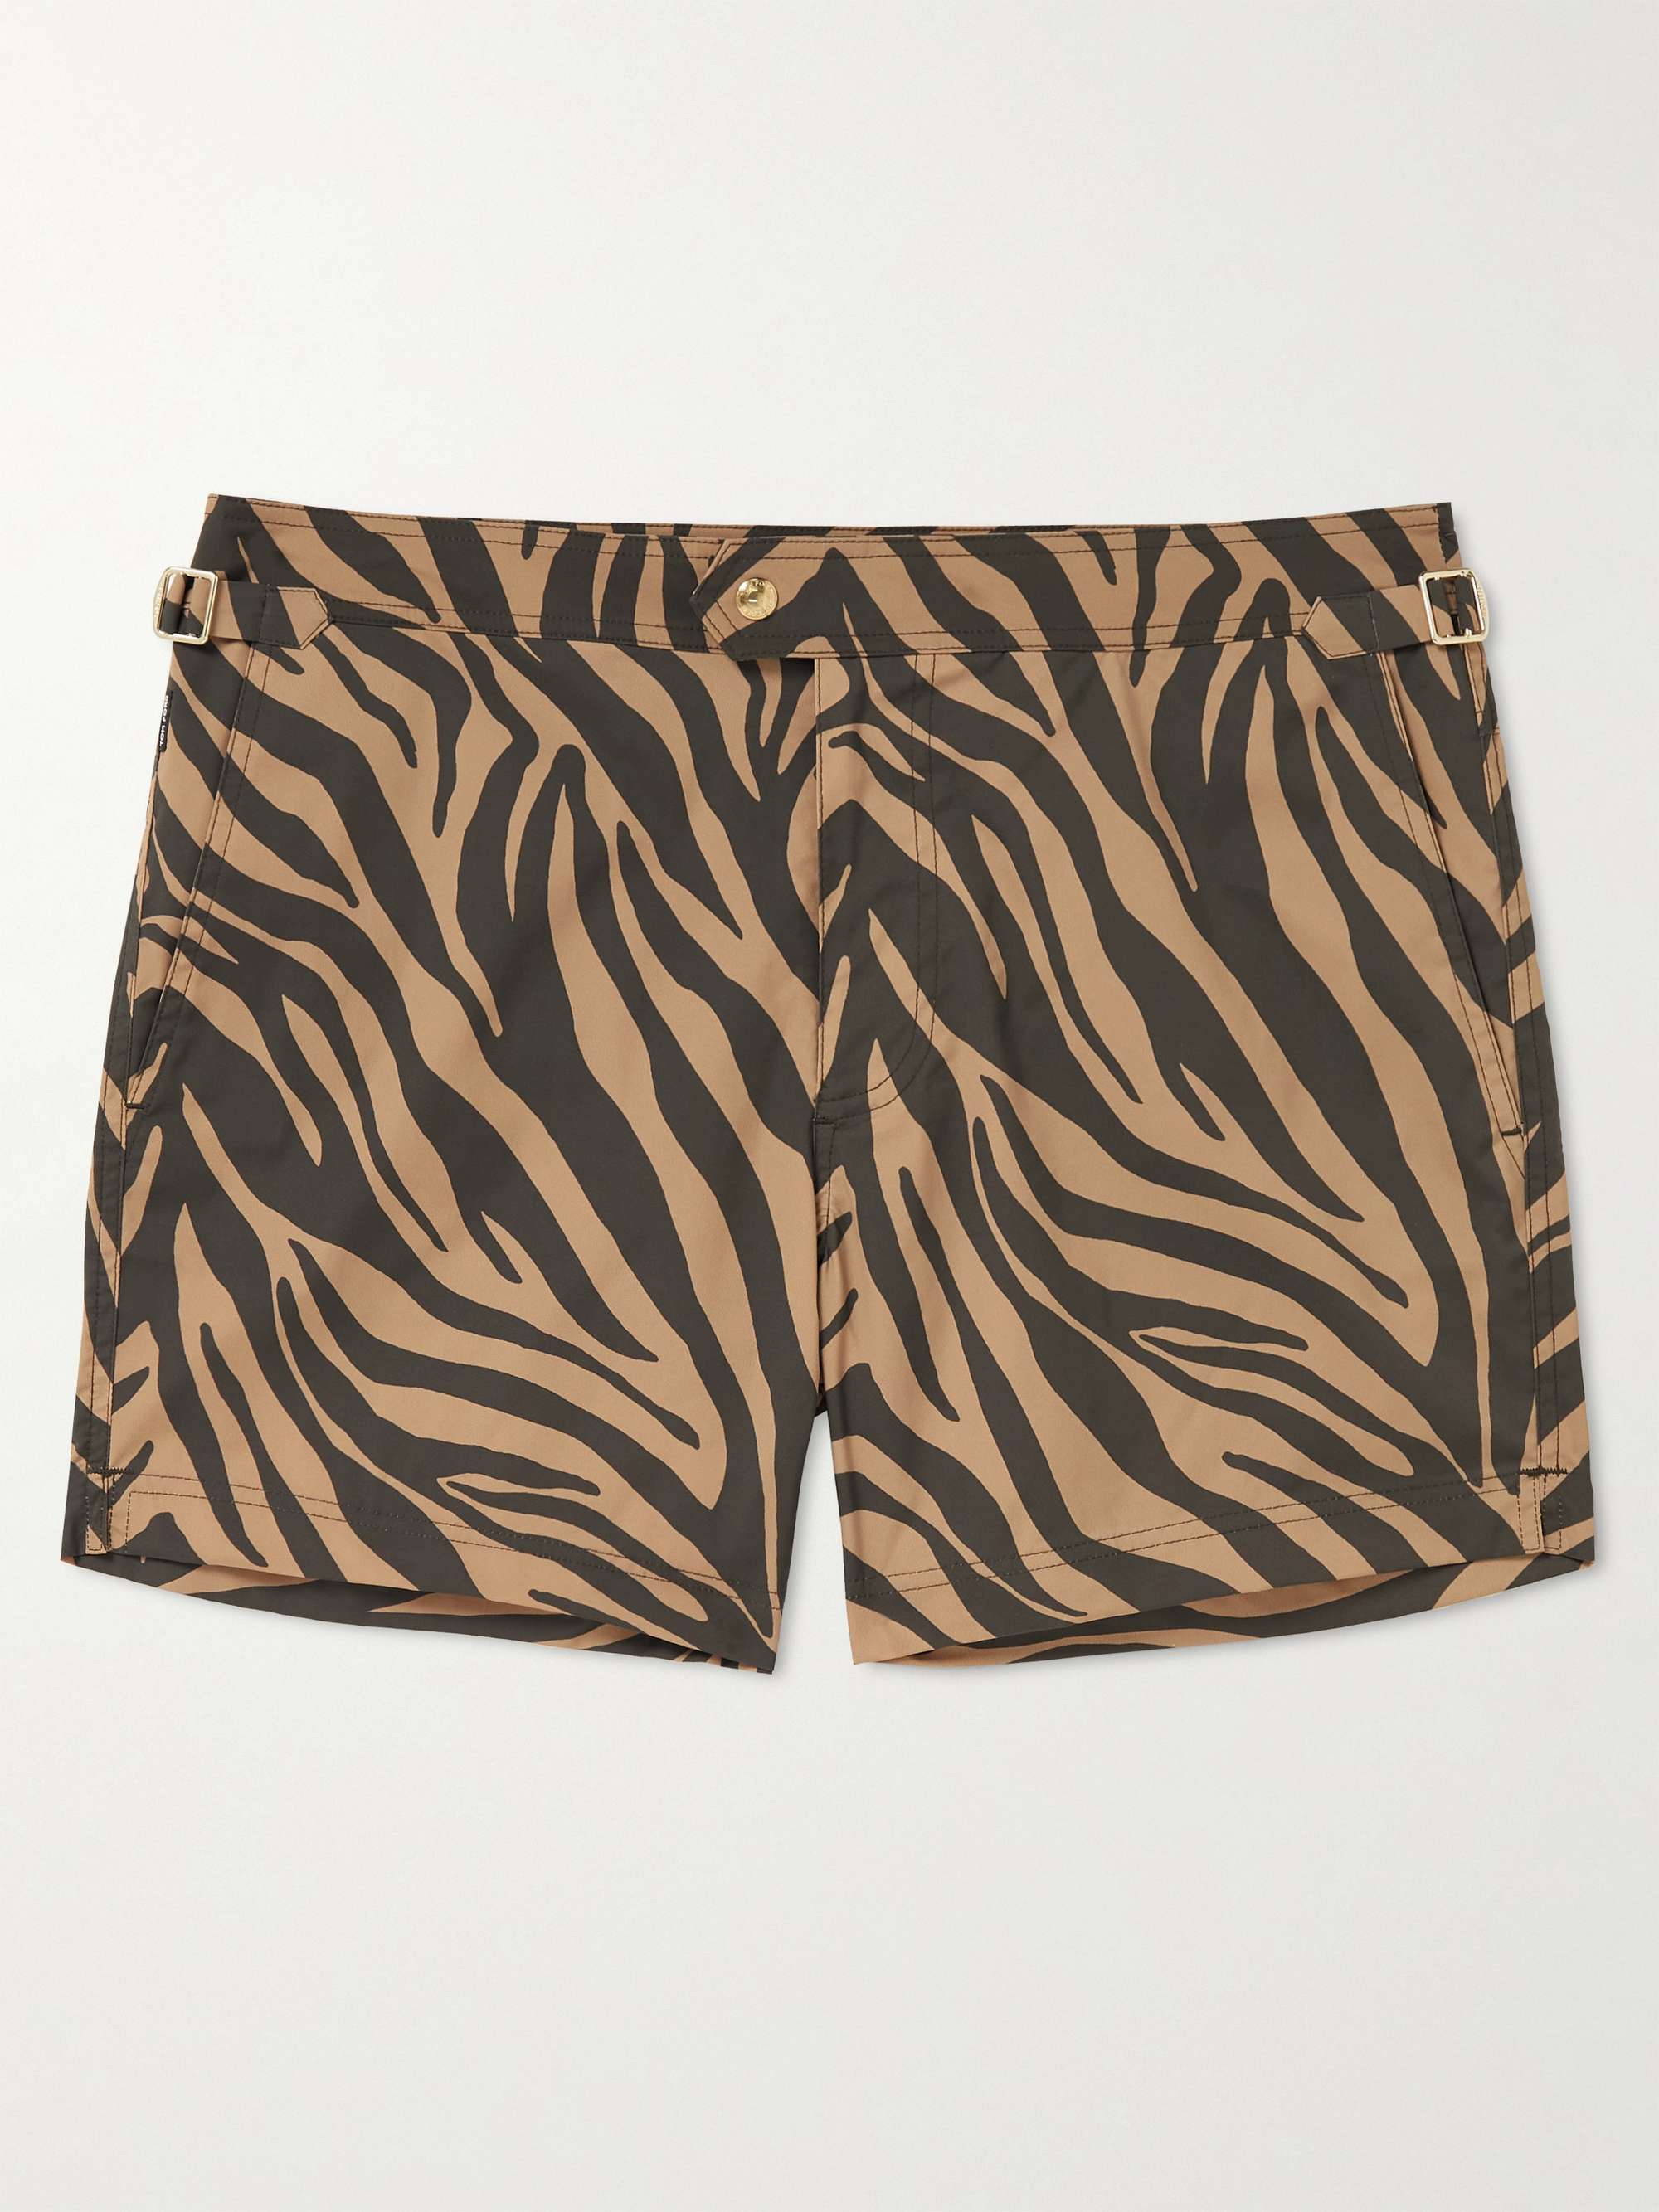 TOM FORD Slim-Fit Short-Length Leopard-Print Swim Shorts